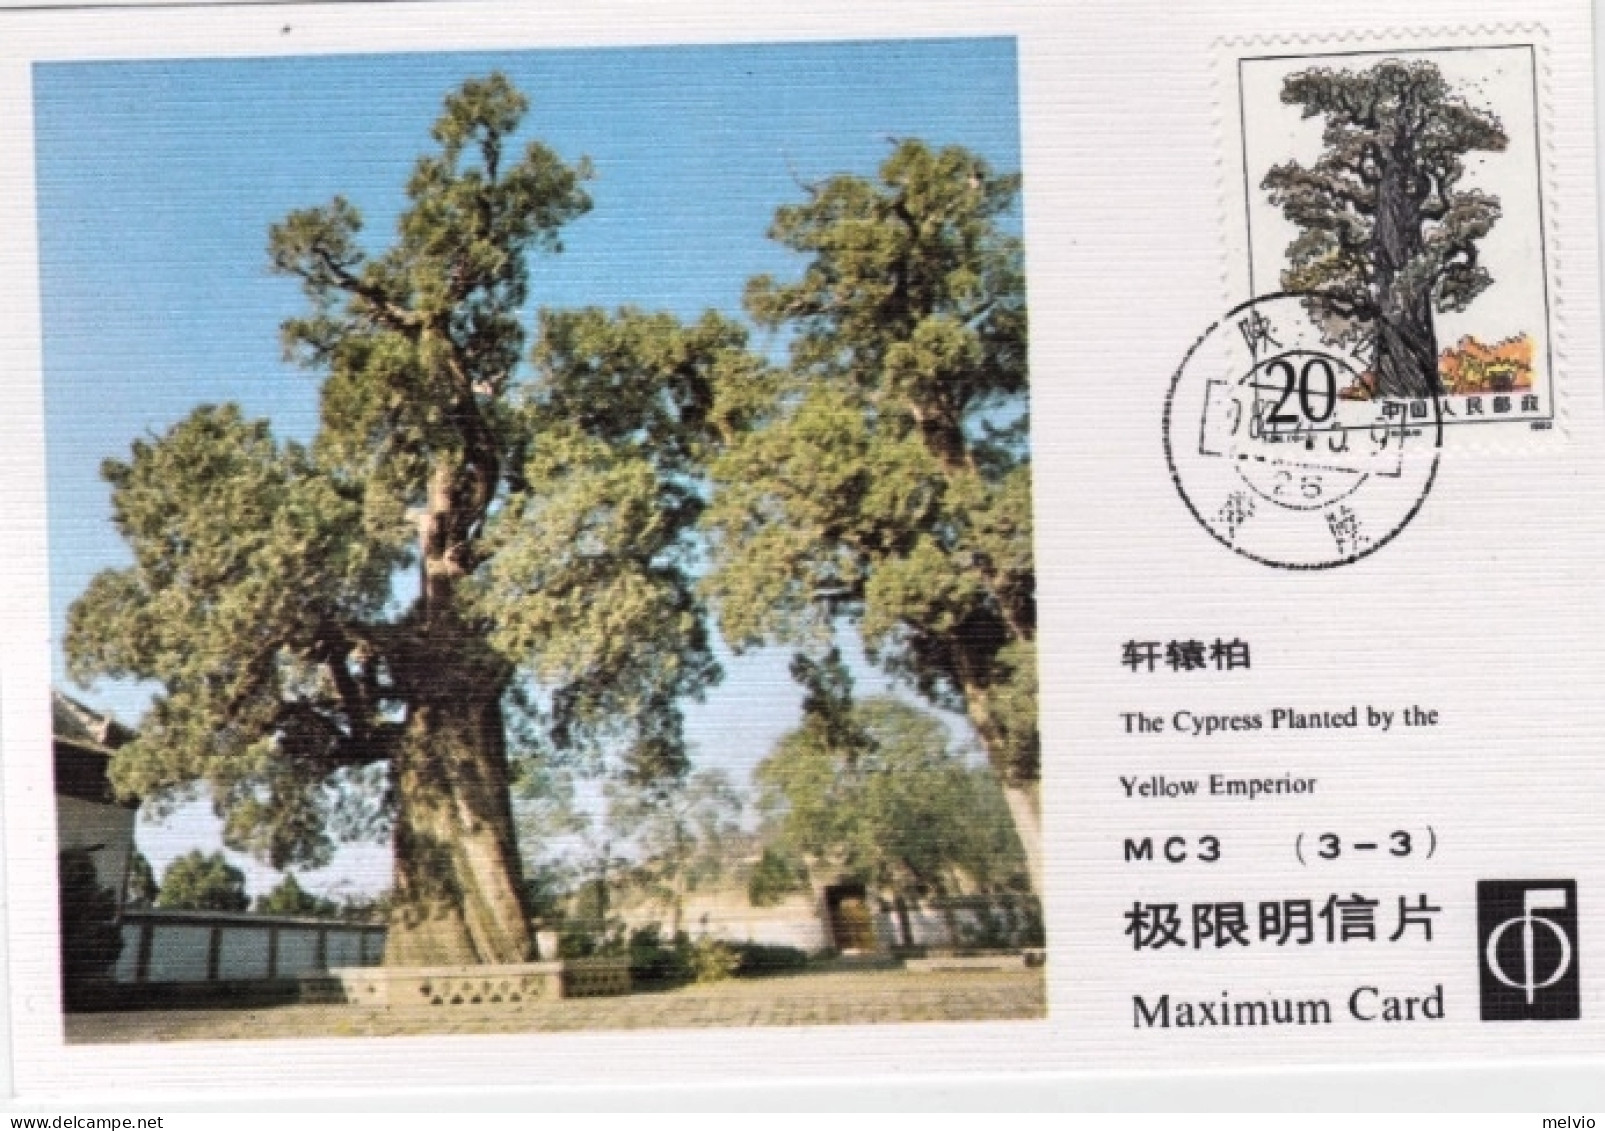 1983-Cina China MC3, Scott1947-9 Tomb Of Yellow Emperor Maximum Cards - Briefe U. Dokumente